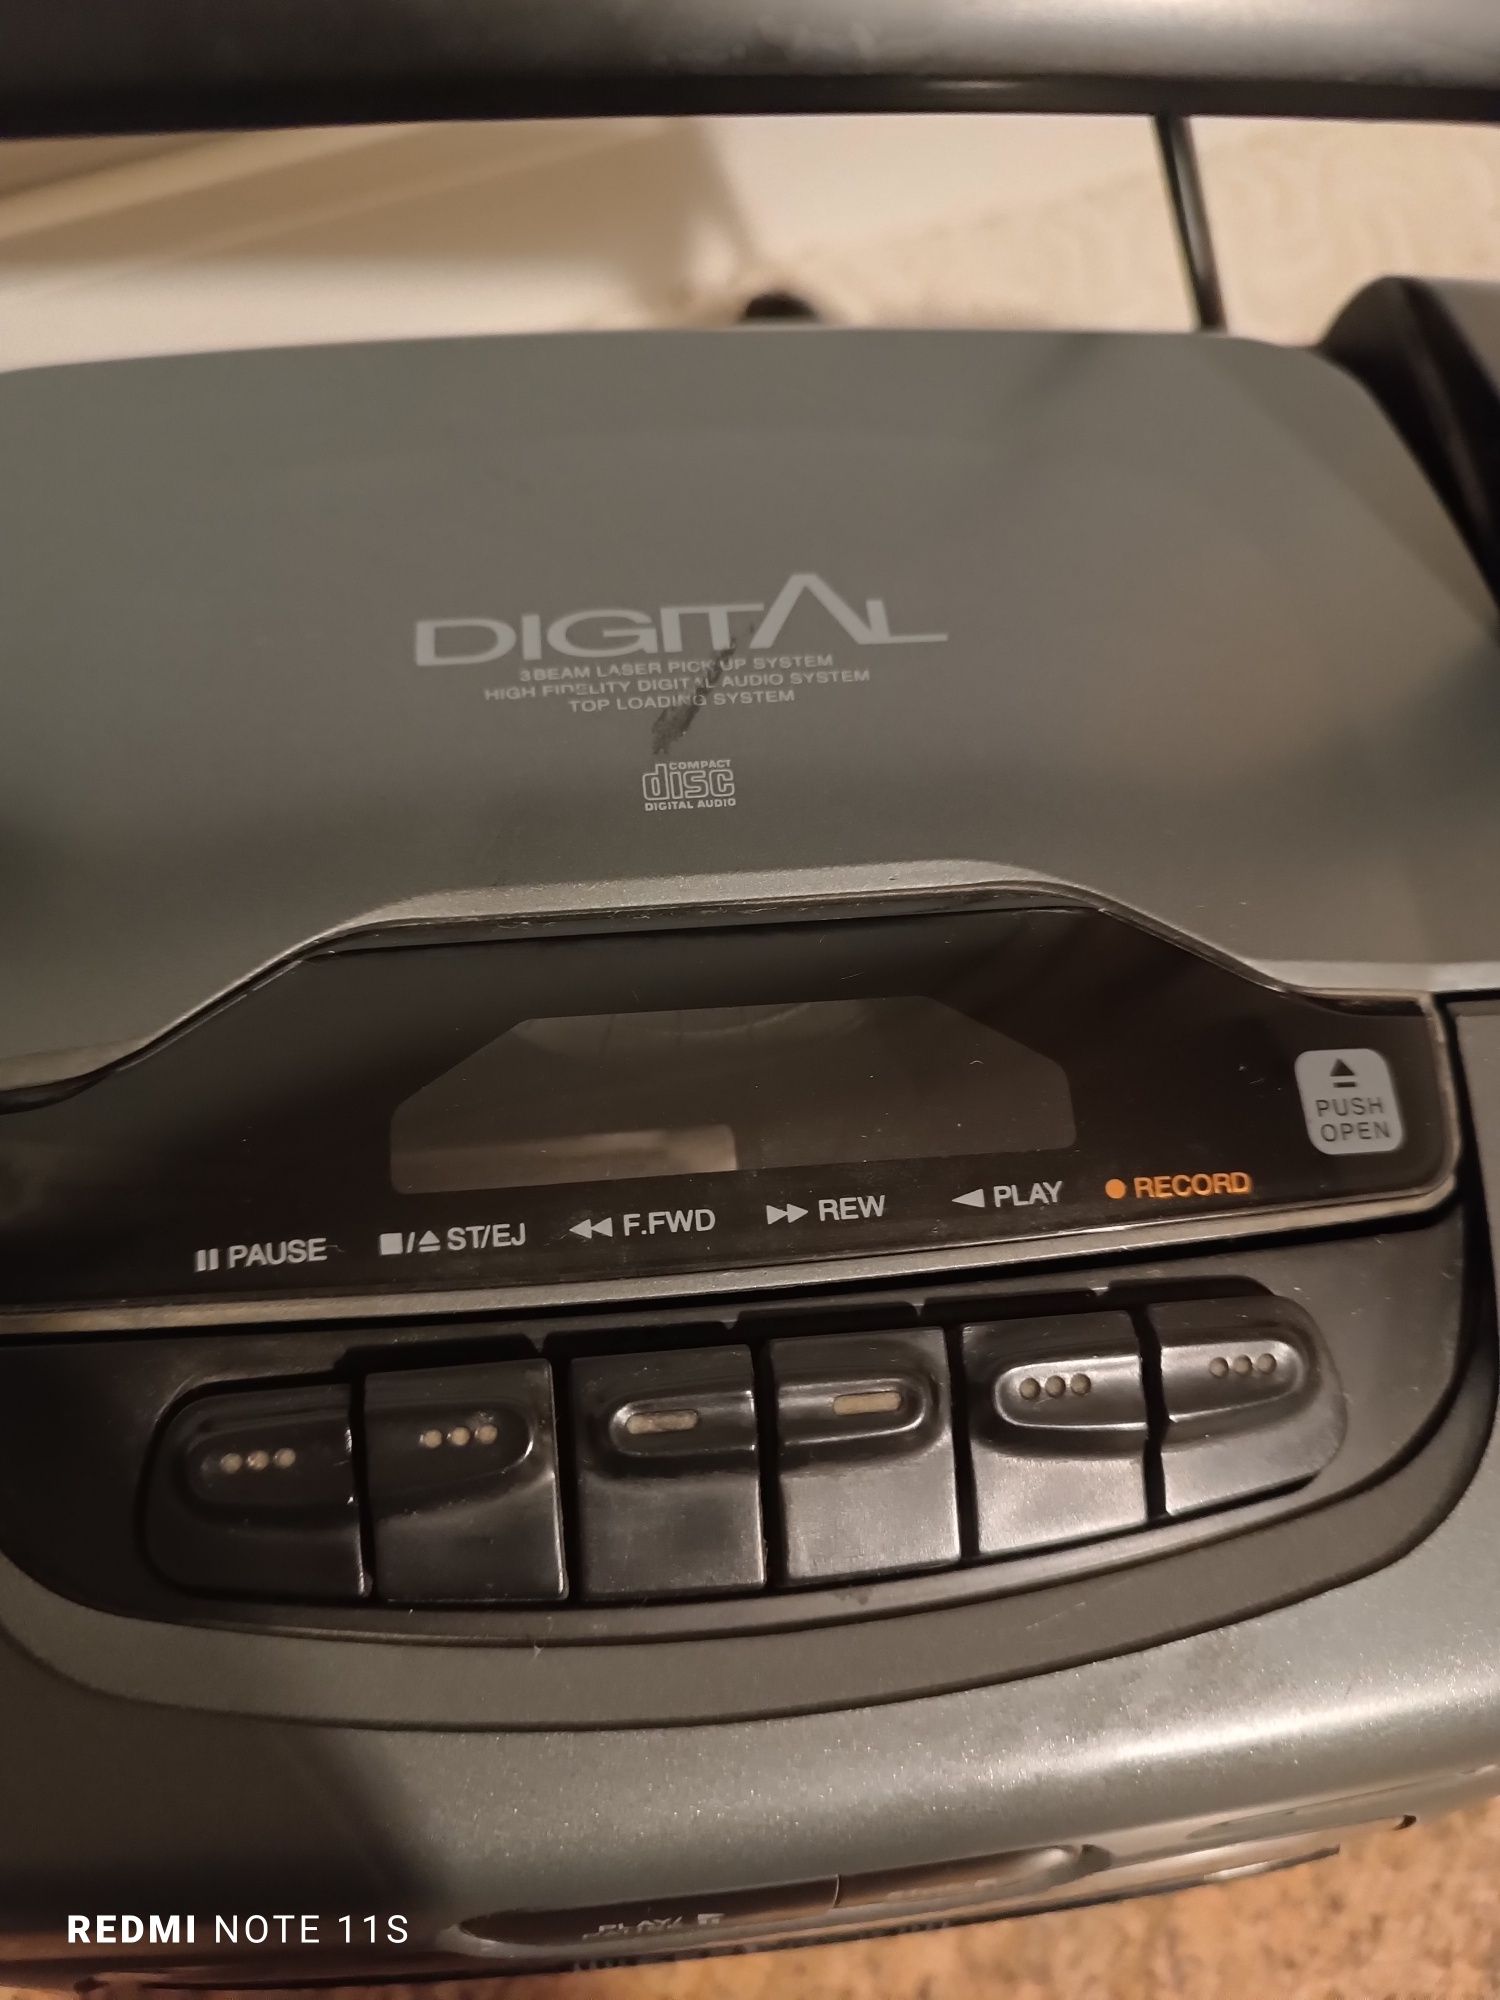 Stare radio robocze daewoo digital